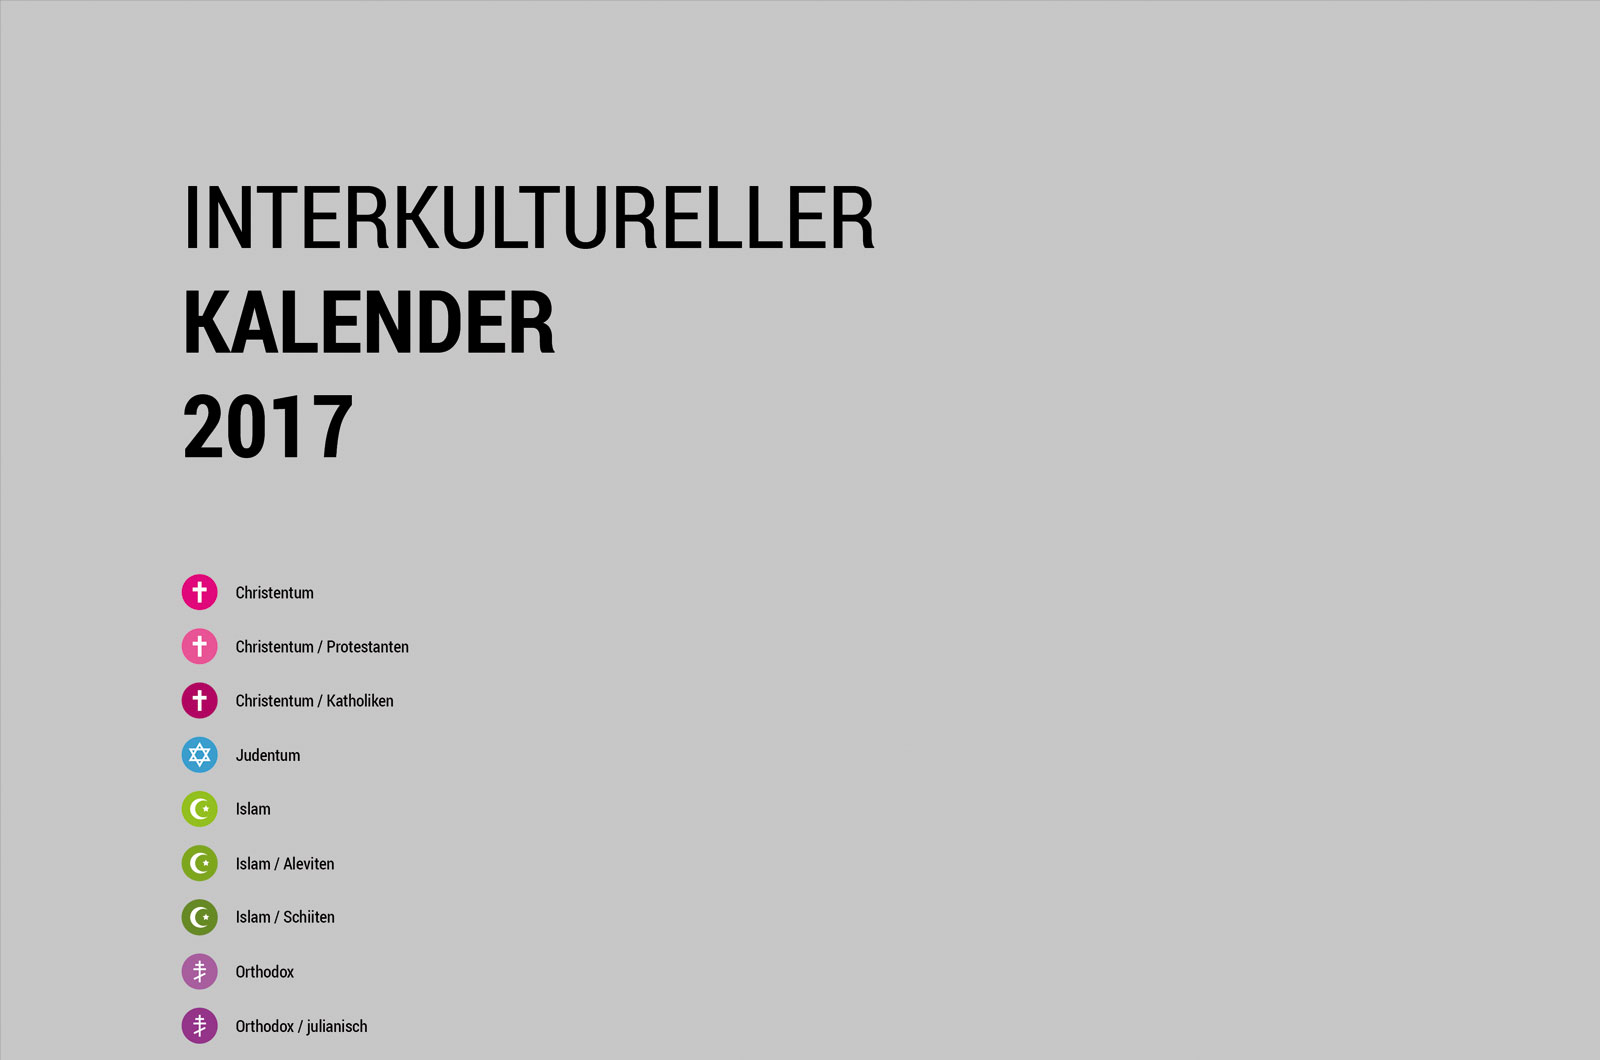 Alexander Glante - Works - Intercultural Calendar 2017 - 02